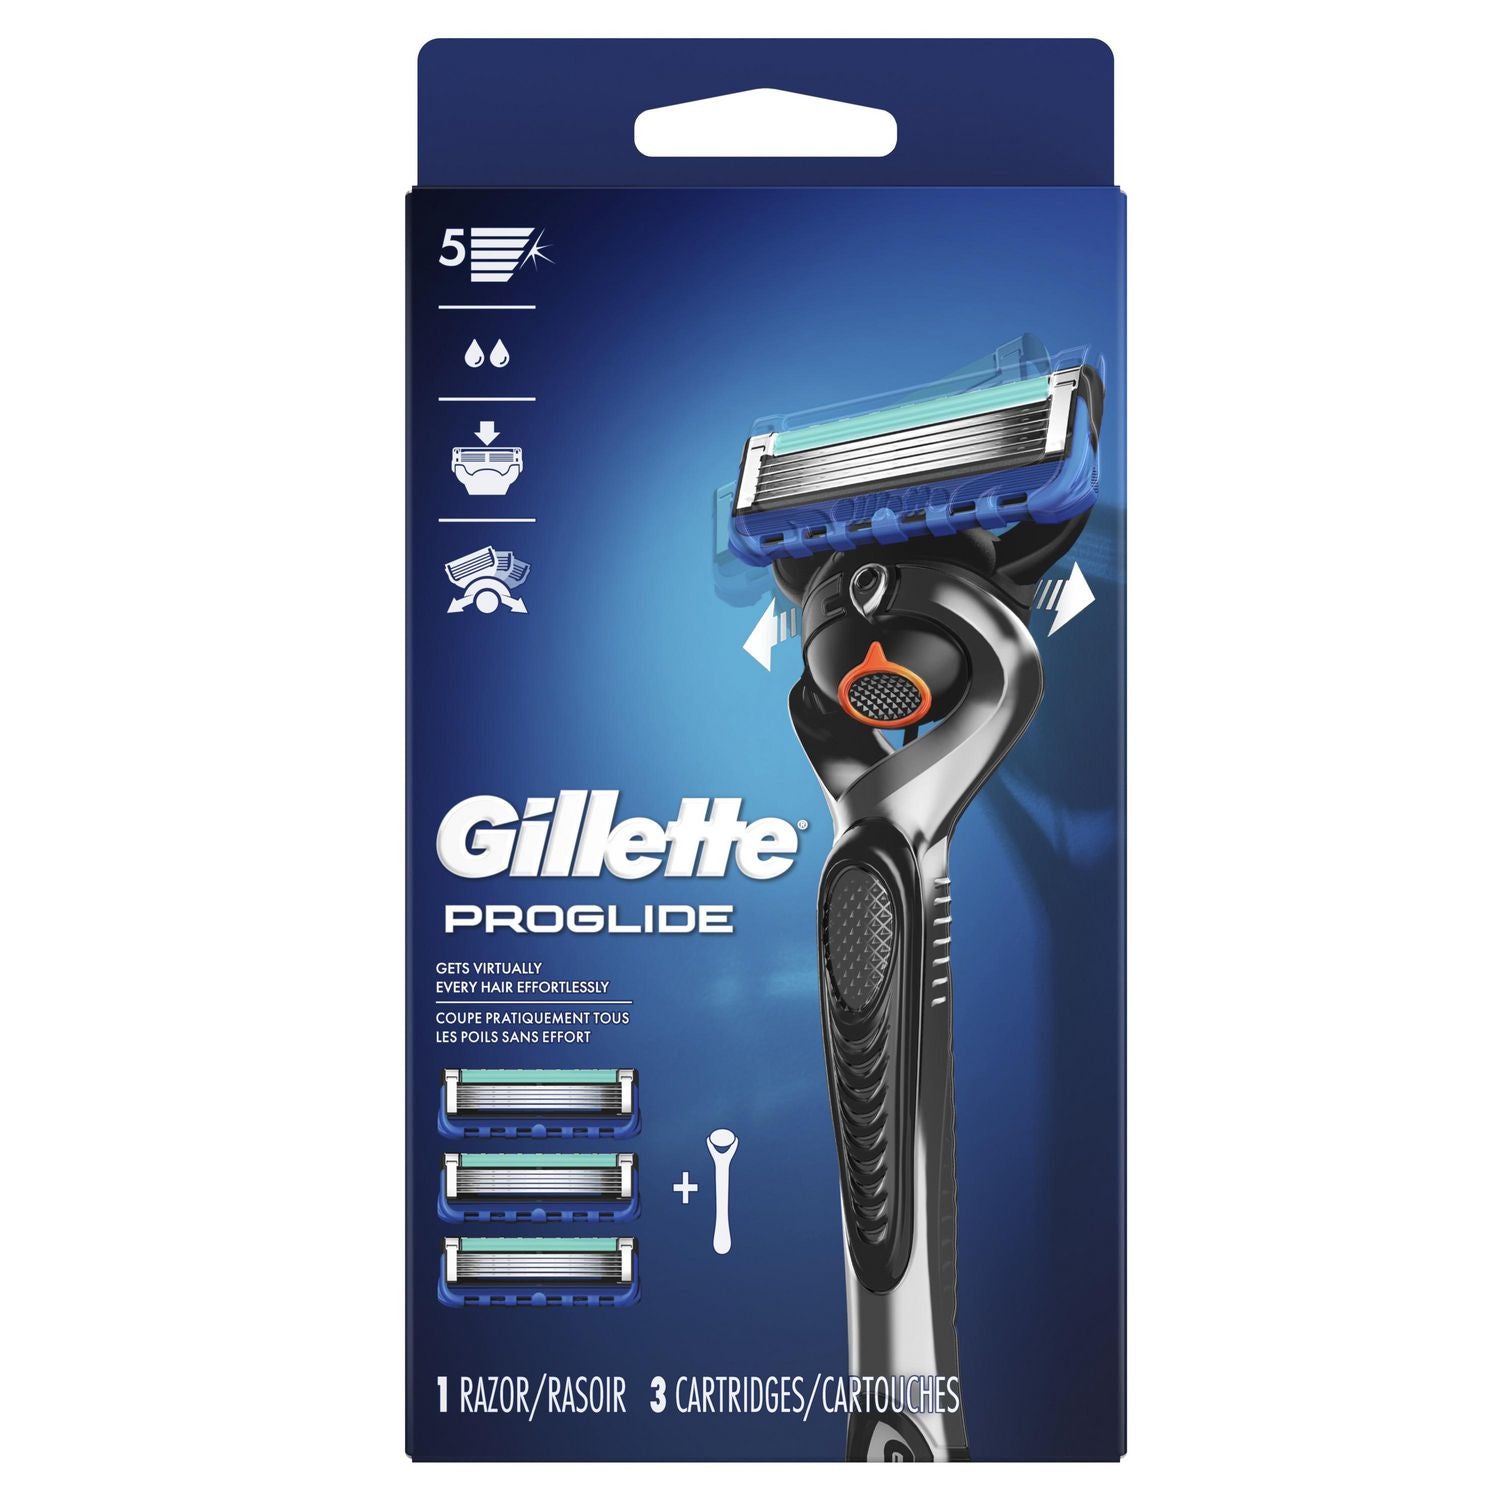 Gillette ProGlide Men's Razor - 1 razor, 3 cartridges